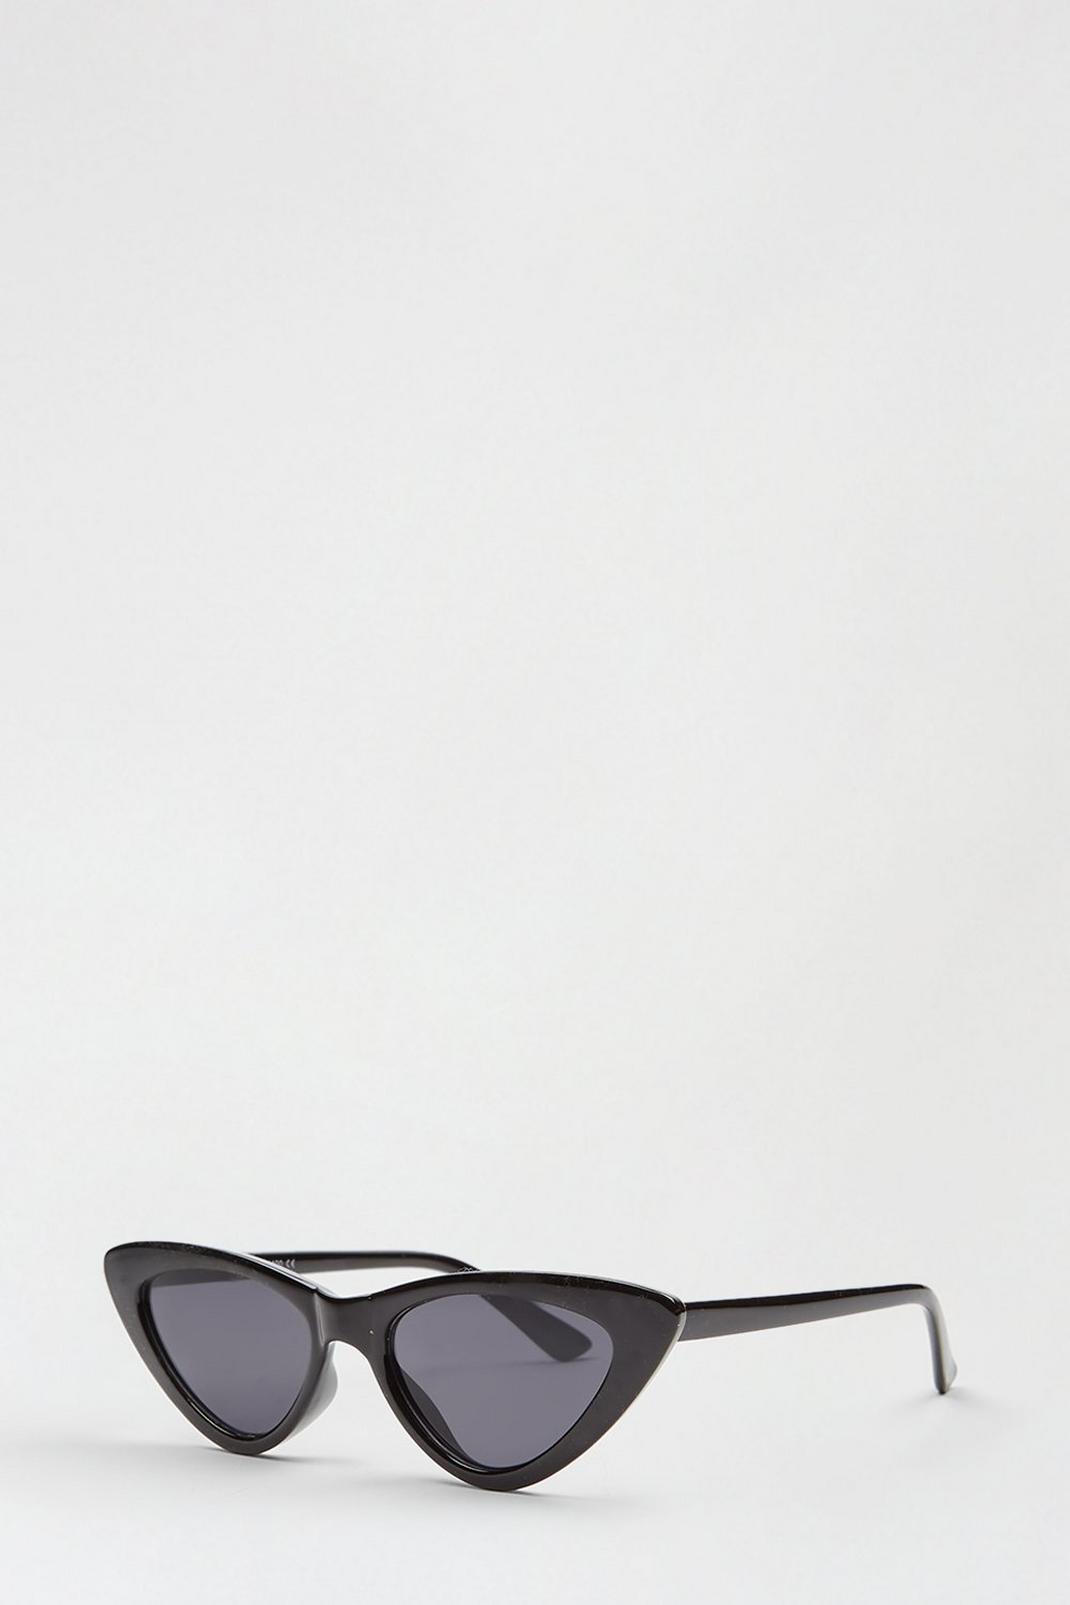 105 Pointed Black Frame Cat Eye Sunglasses image number 2